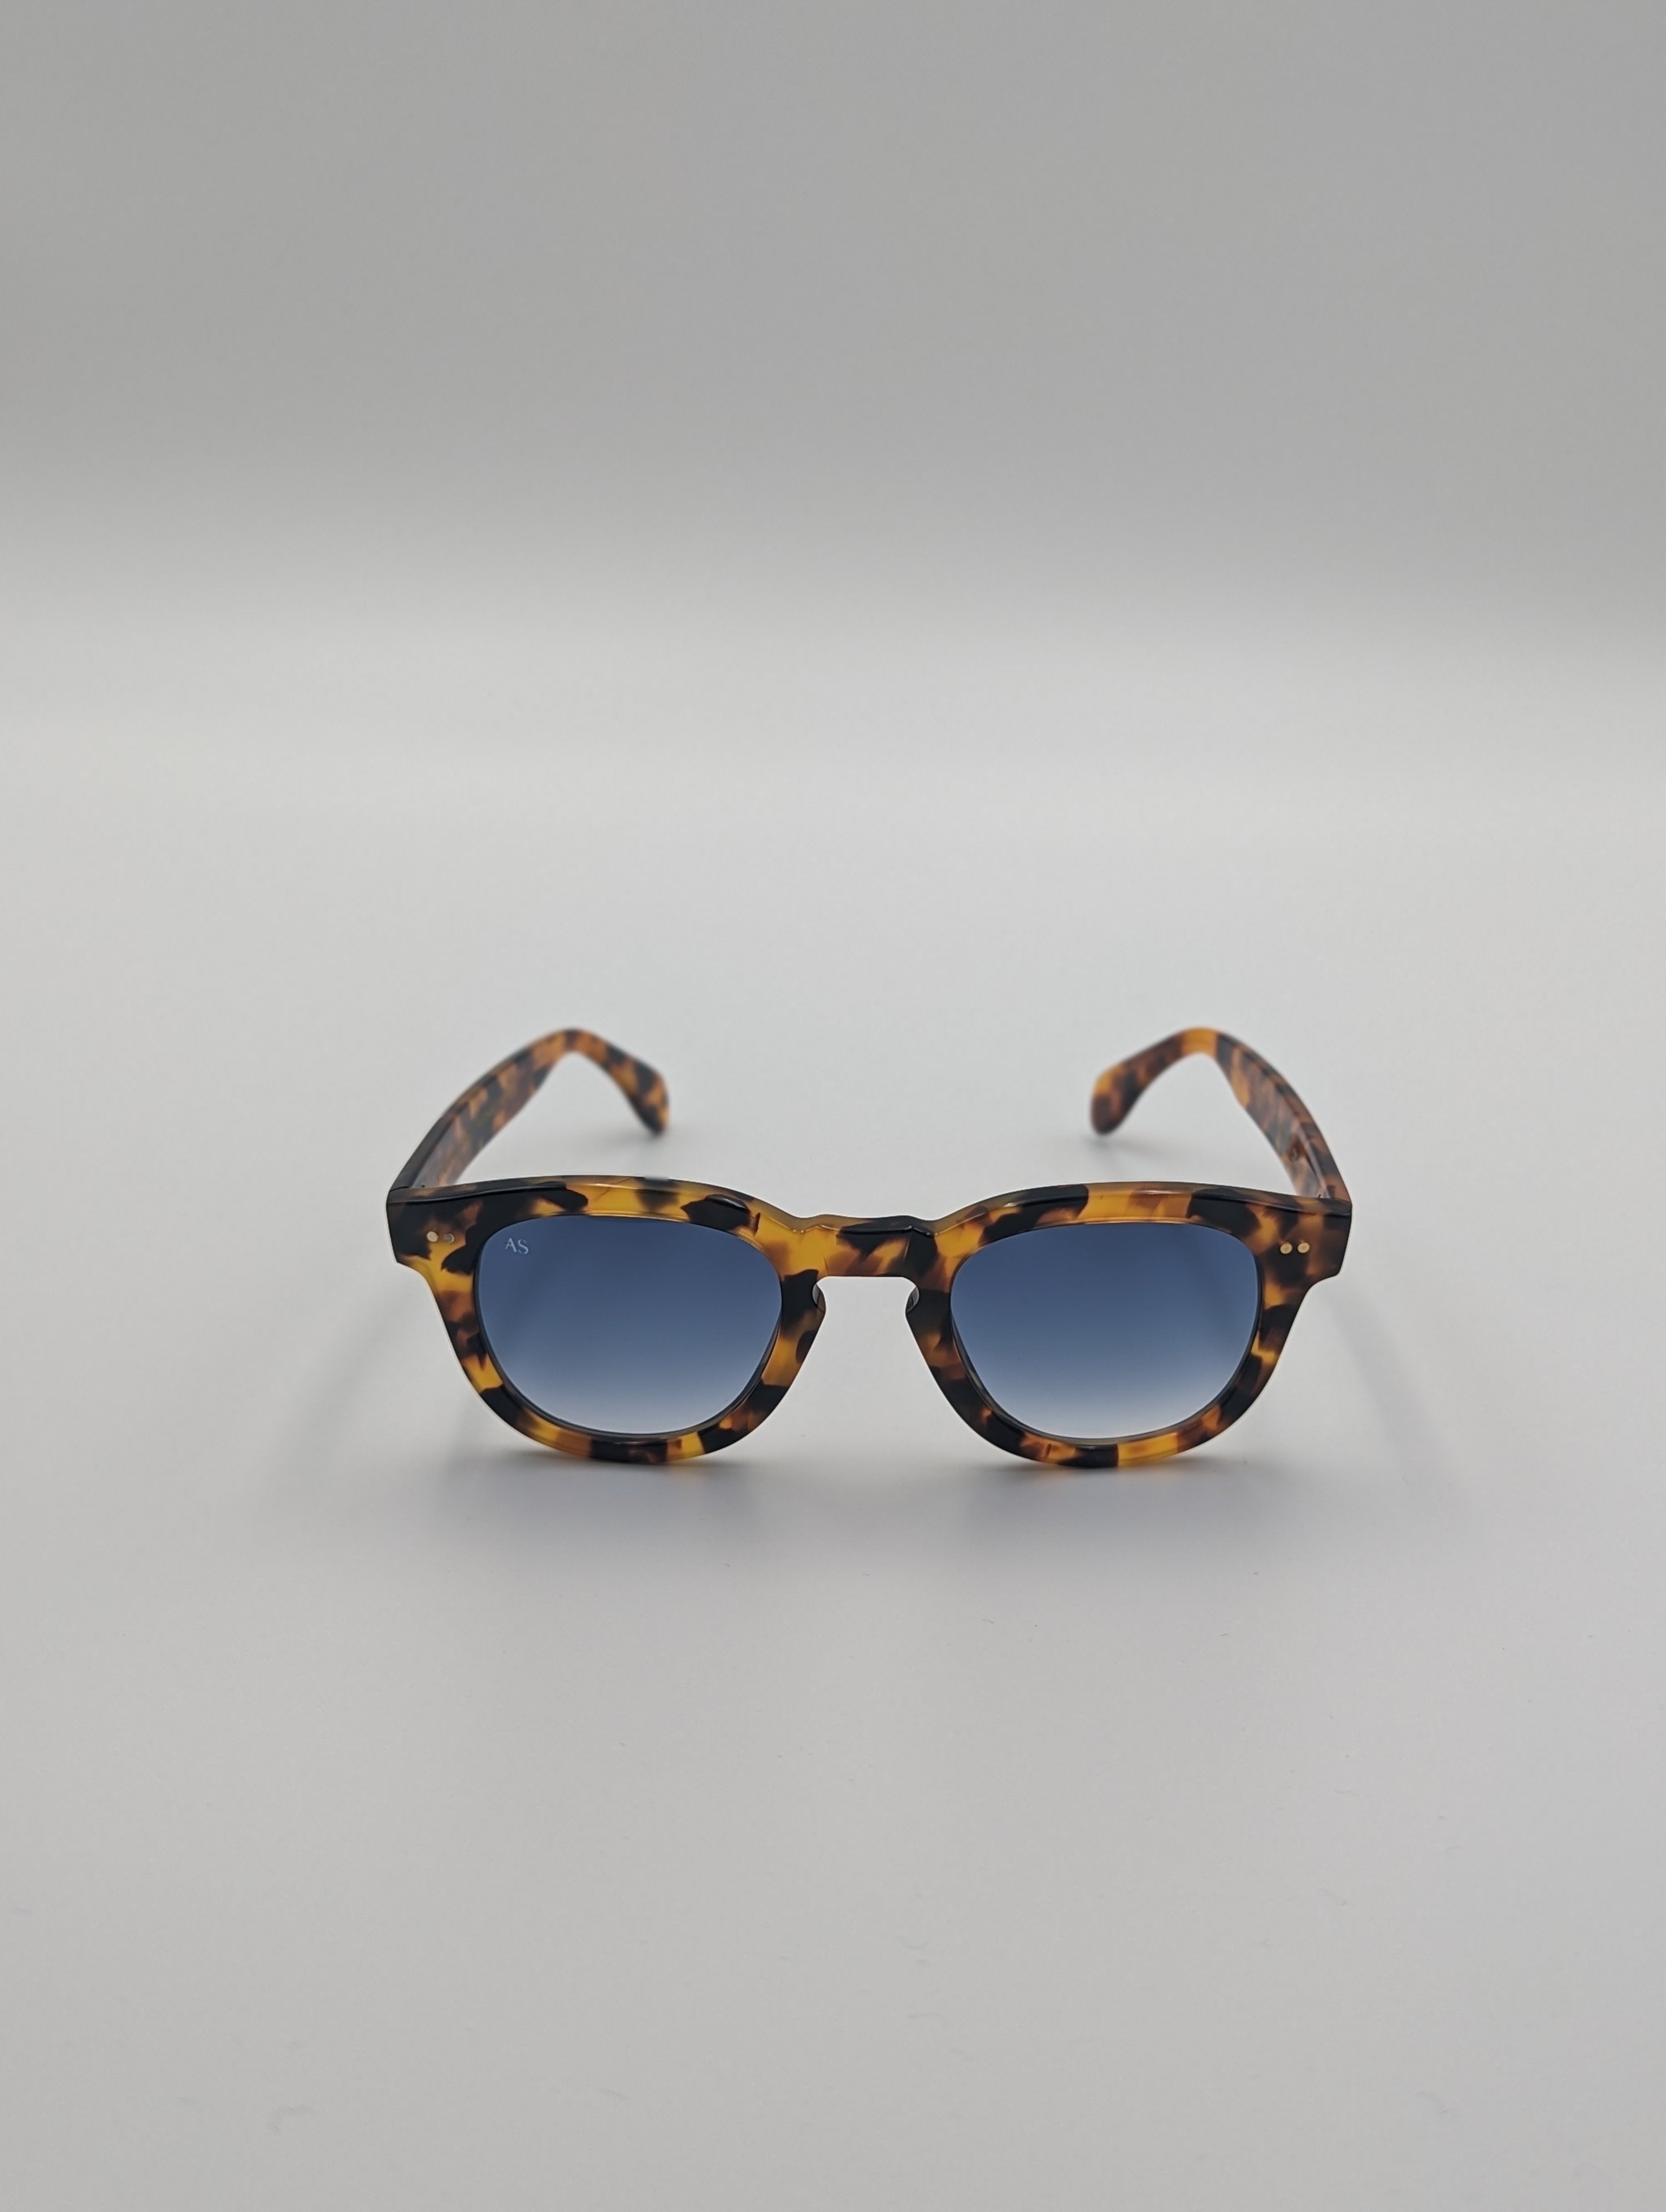 Sunglasses Lmtd - Wasp